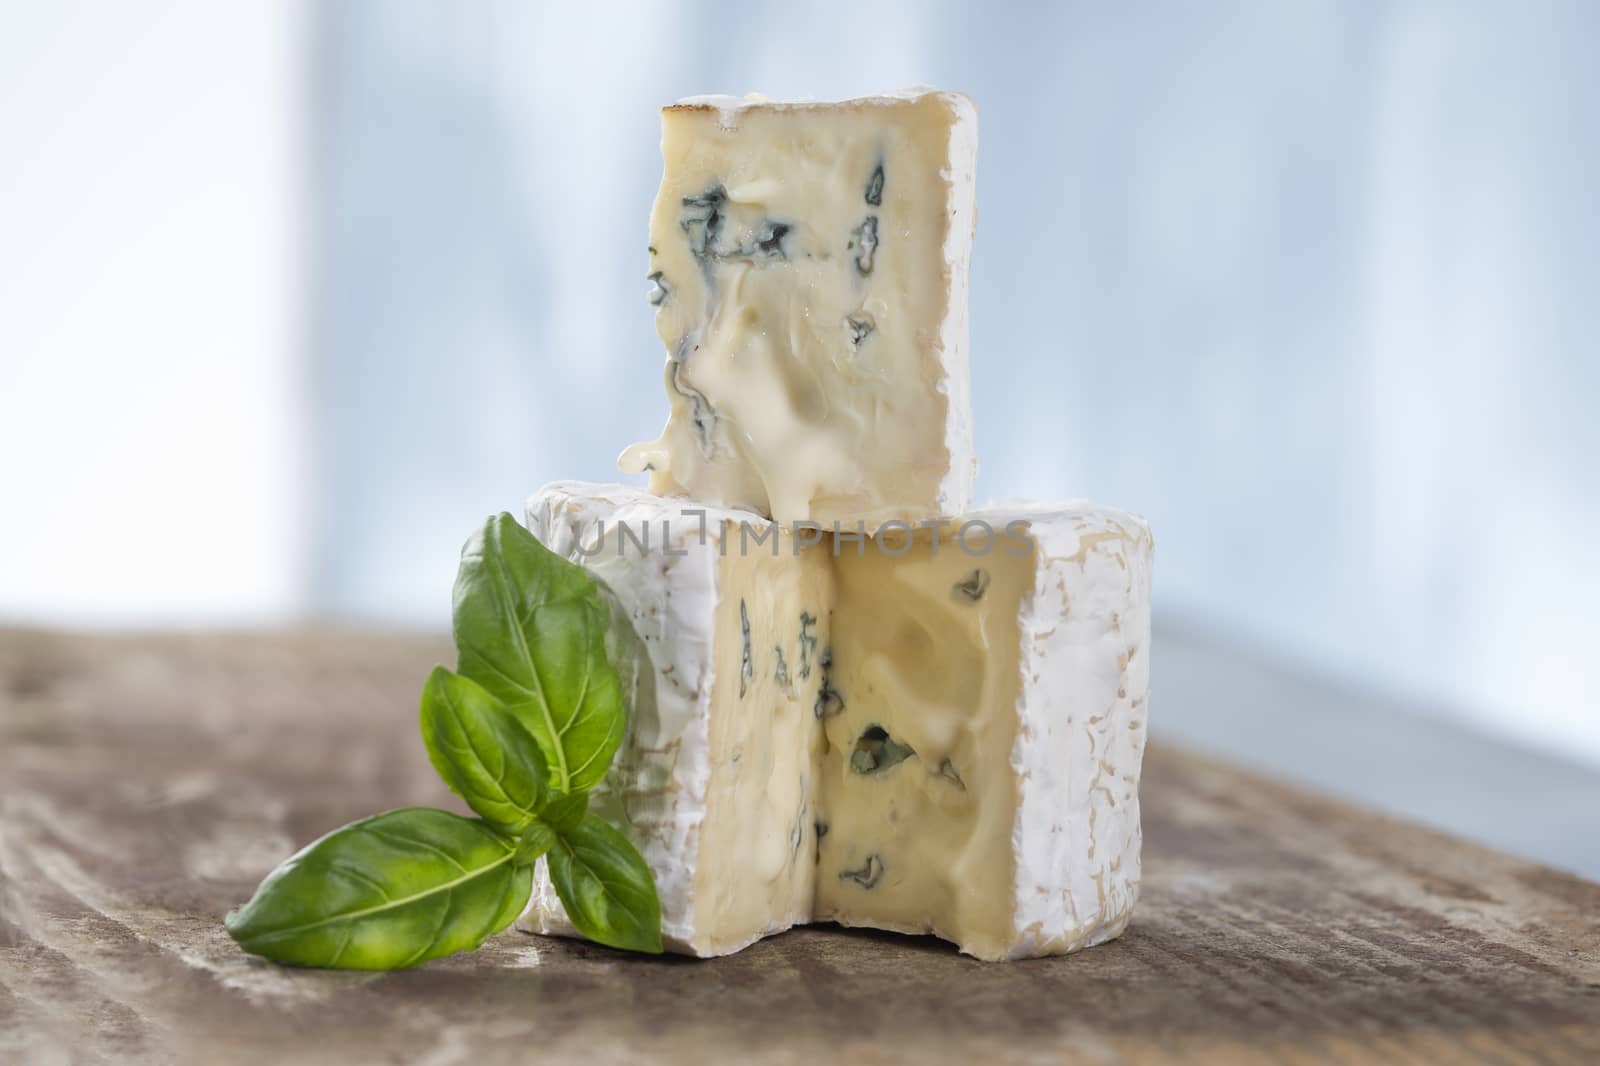 traditional, regioanal cheese - bleu d'auvergne